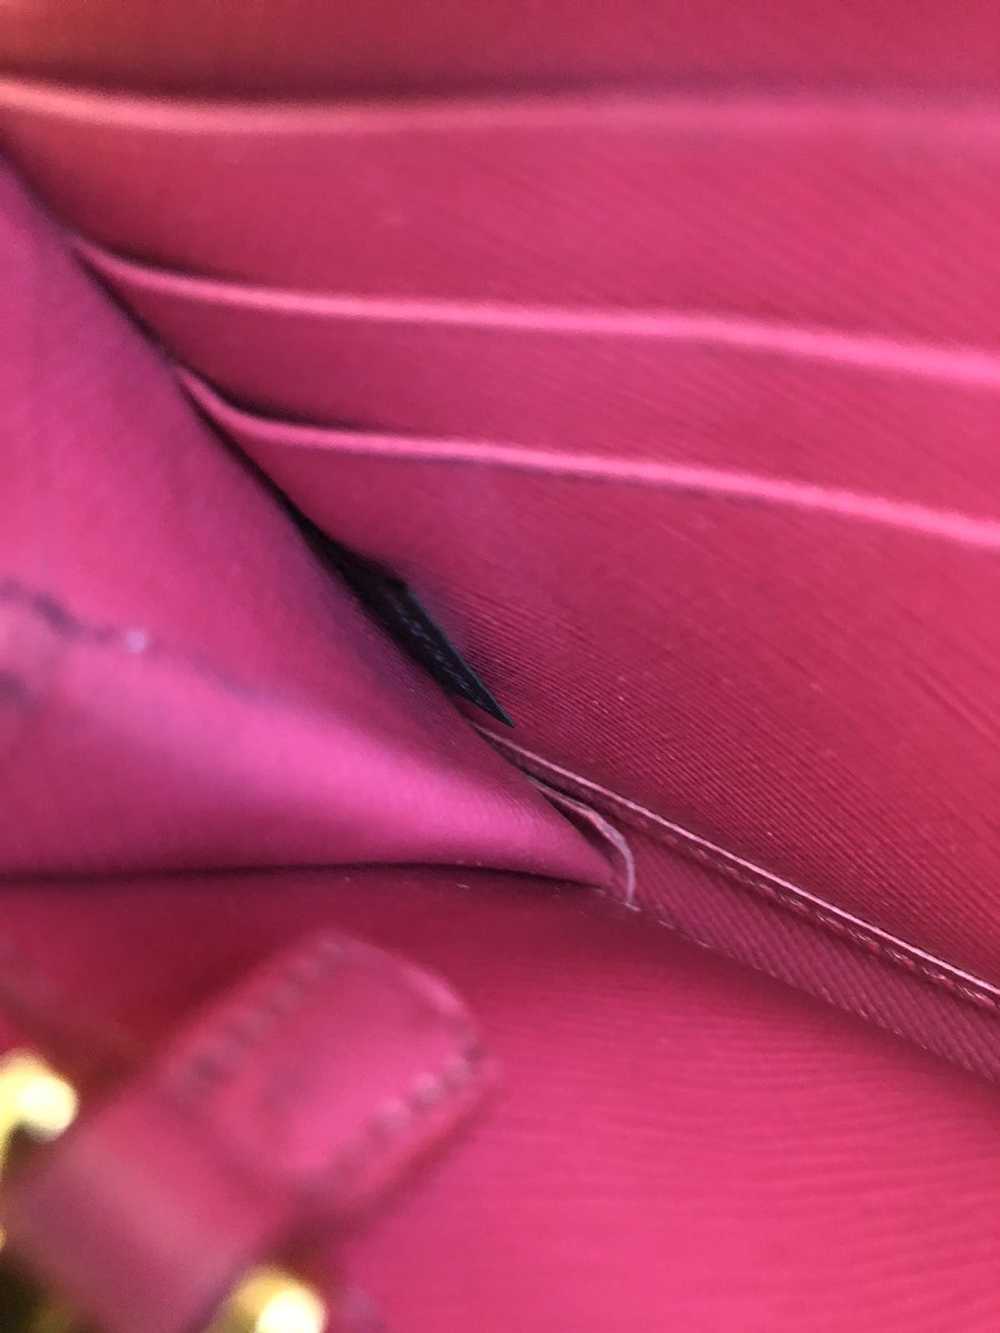 Prada Prada saffiano metal leather zippy wallet - image 6